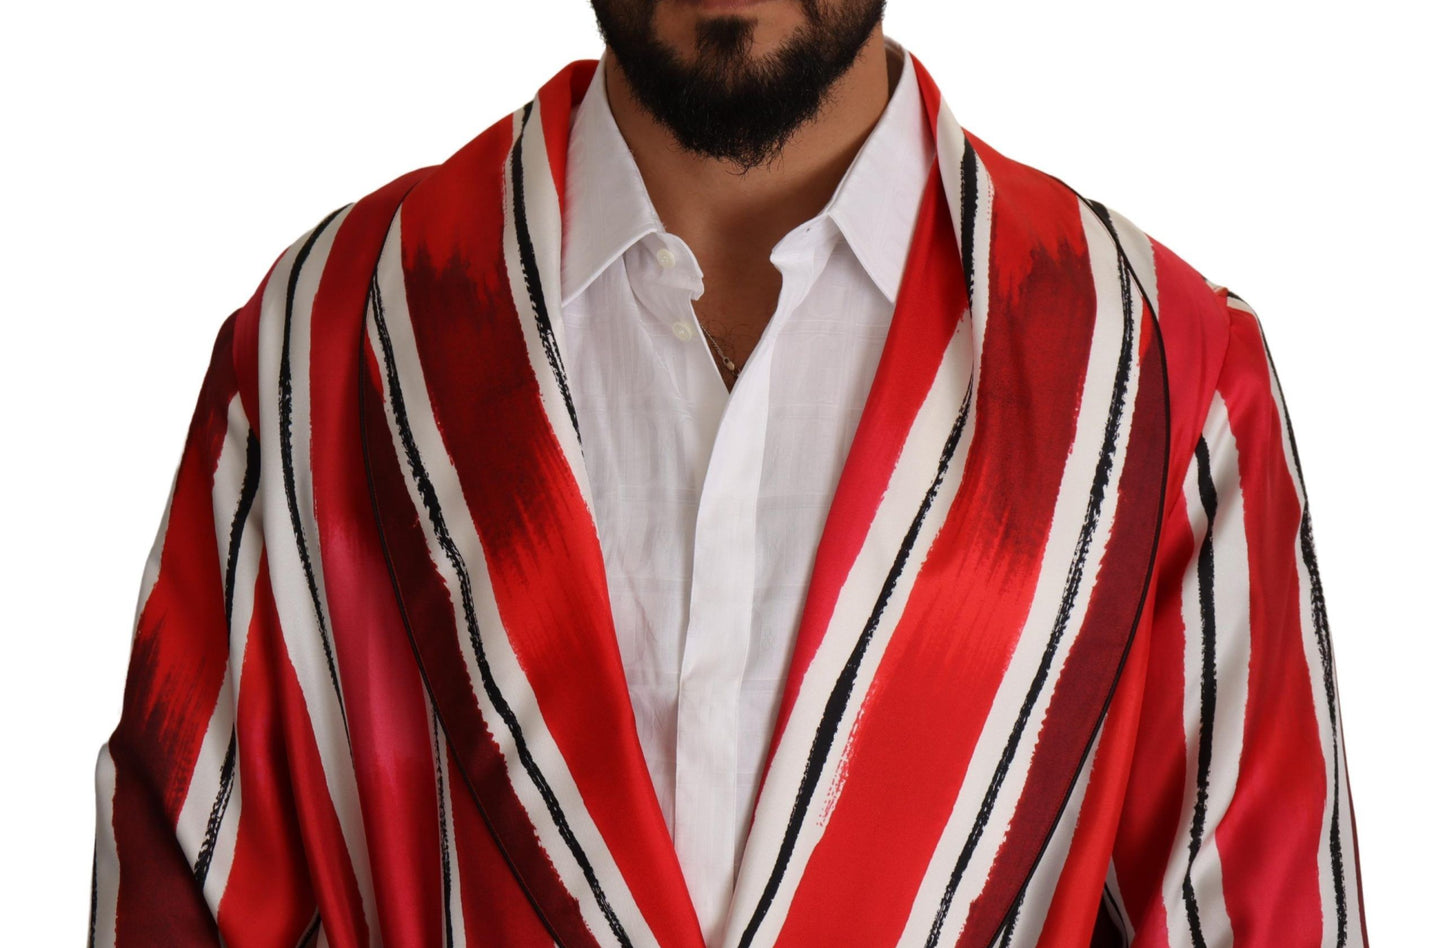 Dolce & Gabbana Chic Striped Silk Sleepwear Robe